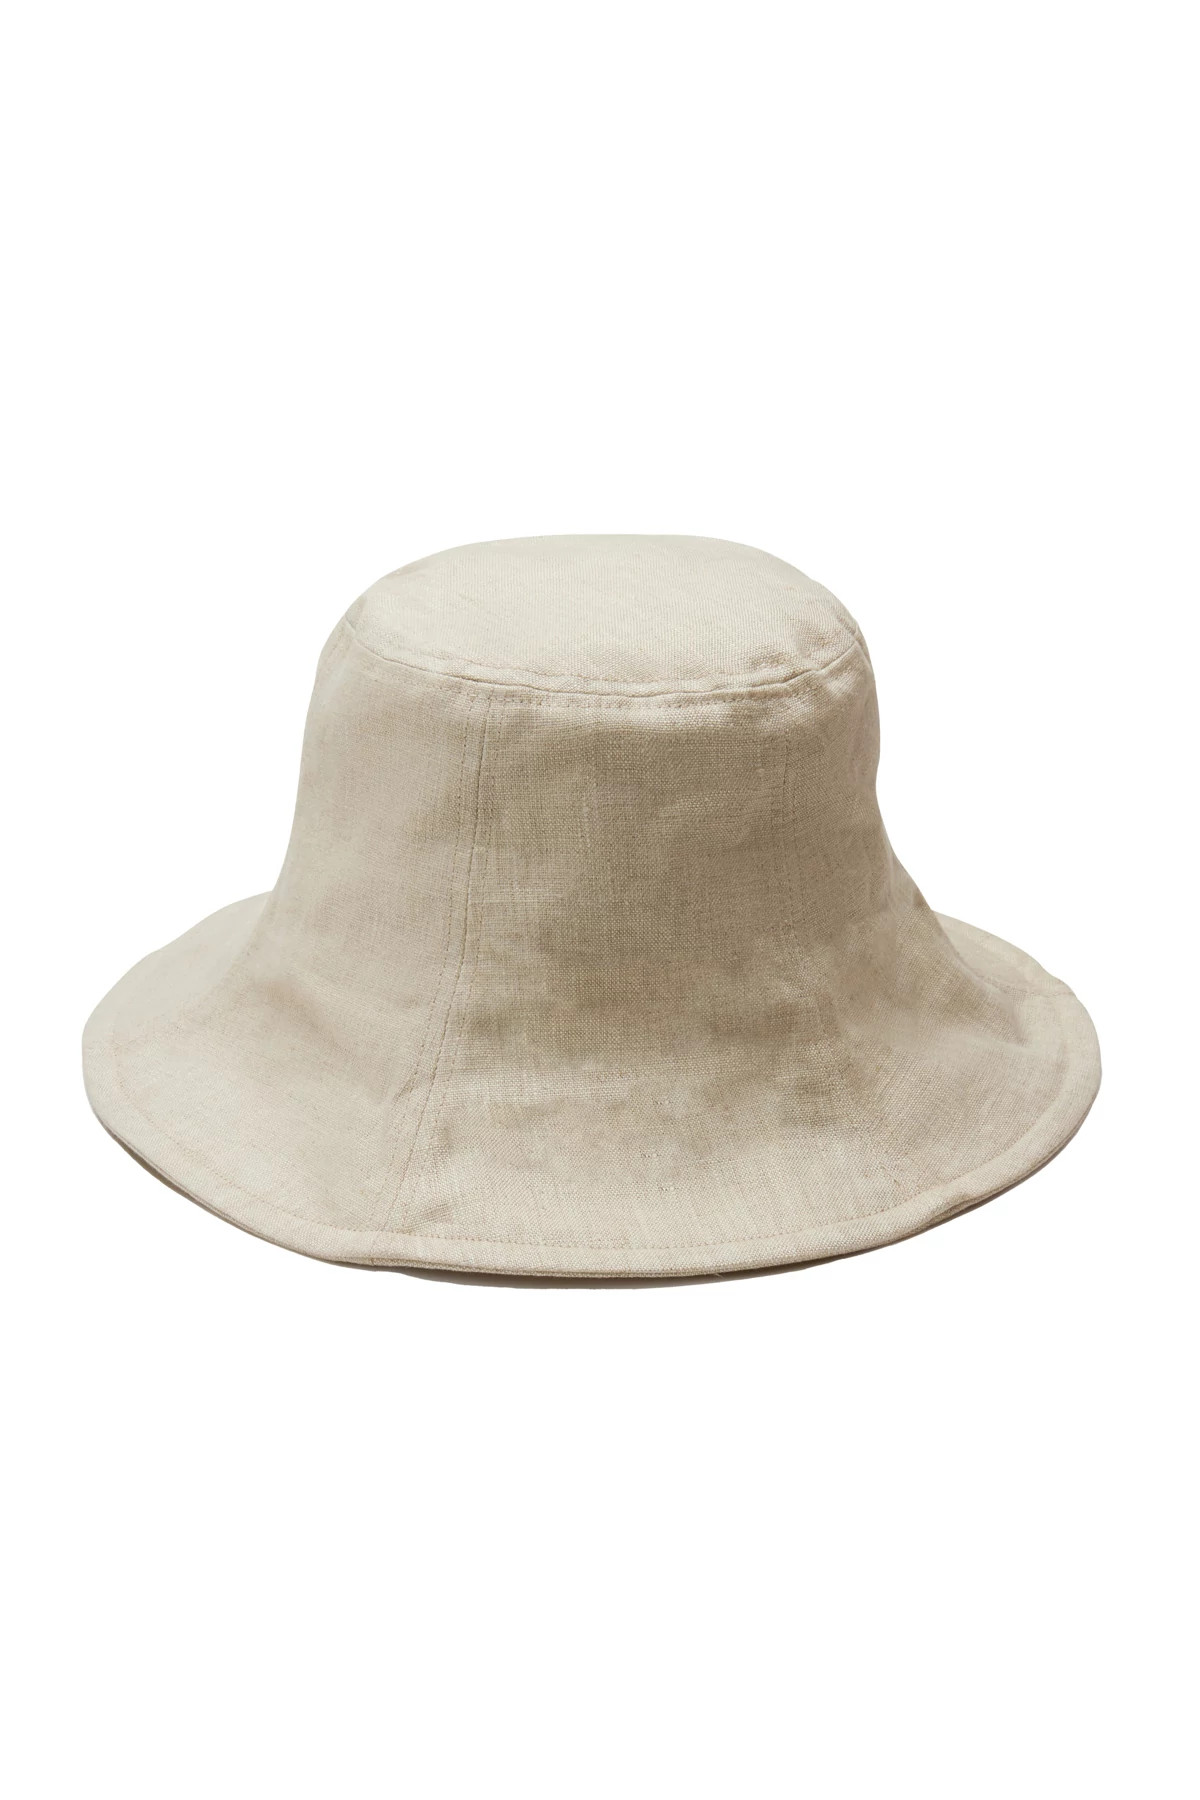 NATURAL Cami Bucket Hat image number 2